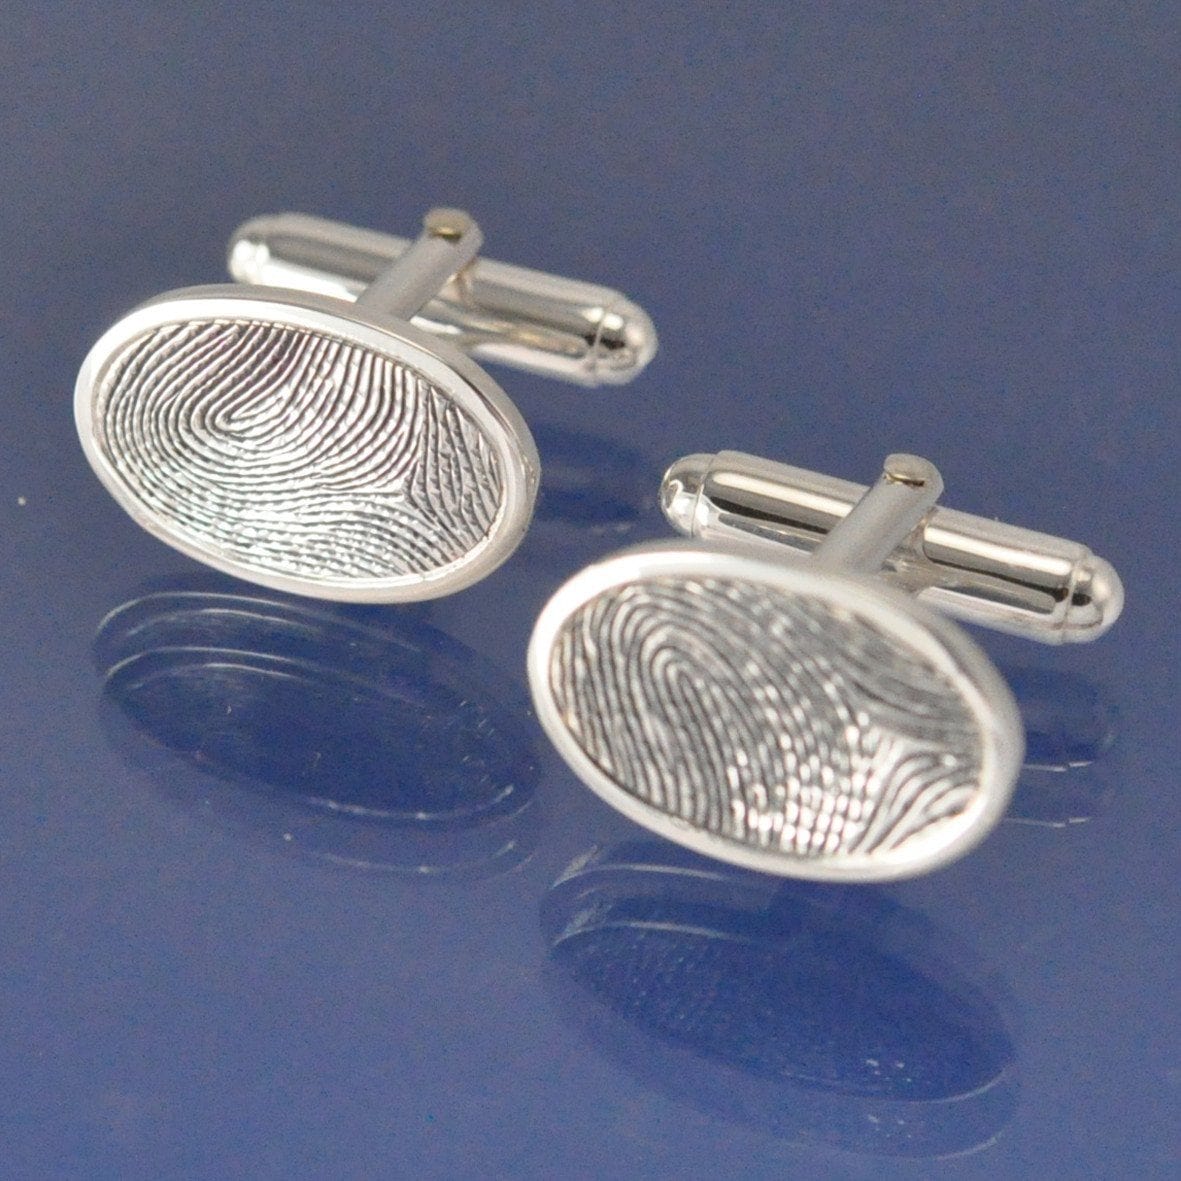 Fingerprint Cufflinks - Oval Cufflinks by Chris Parry Jewellery